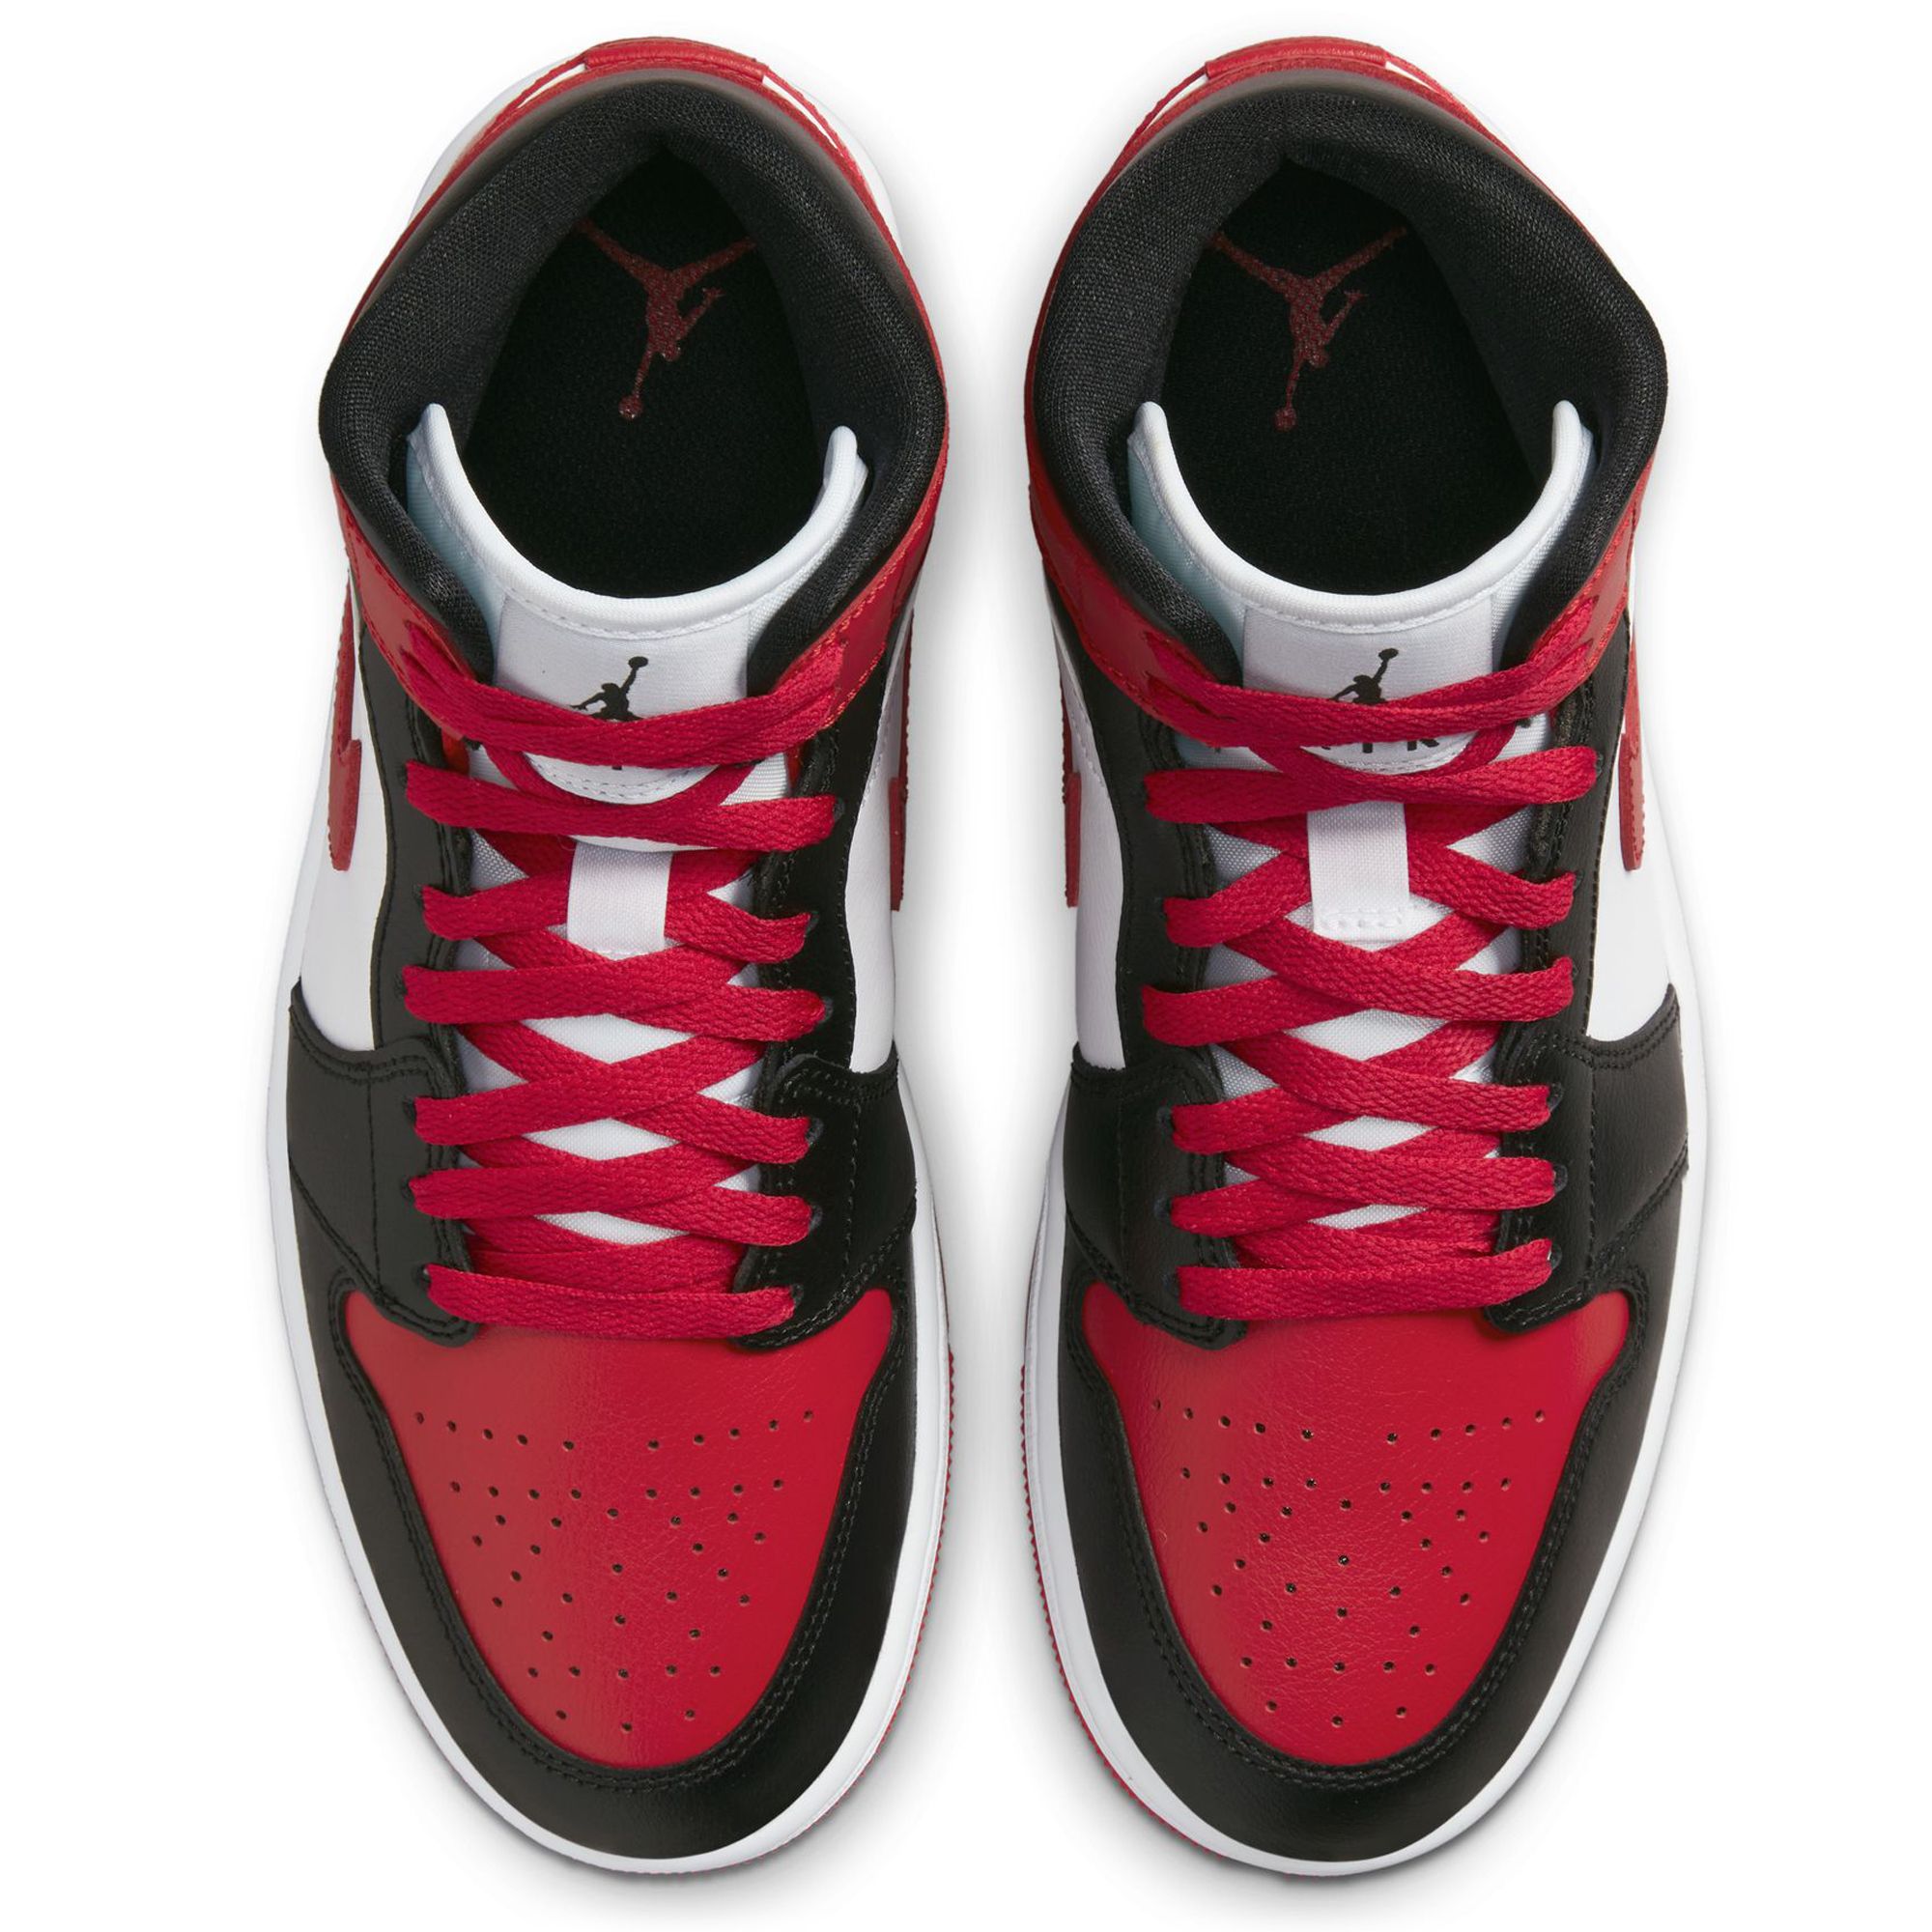 Air Jordan 1 Mid 'Chicago Black Toe' Shoes - 9